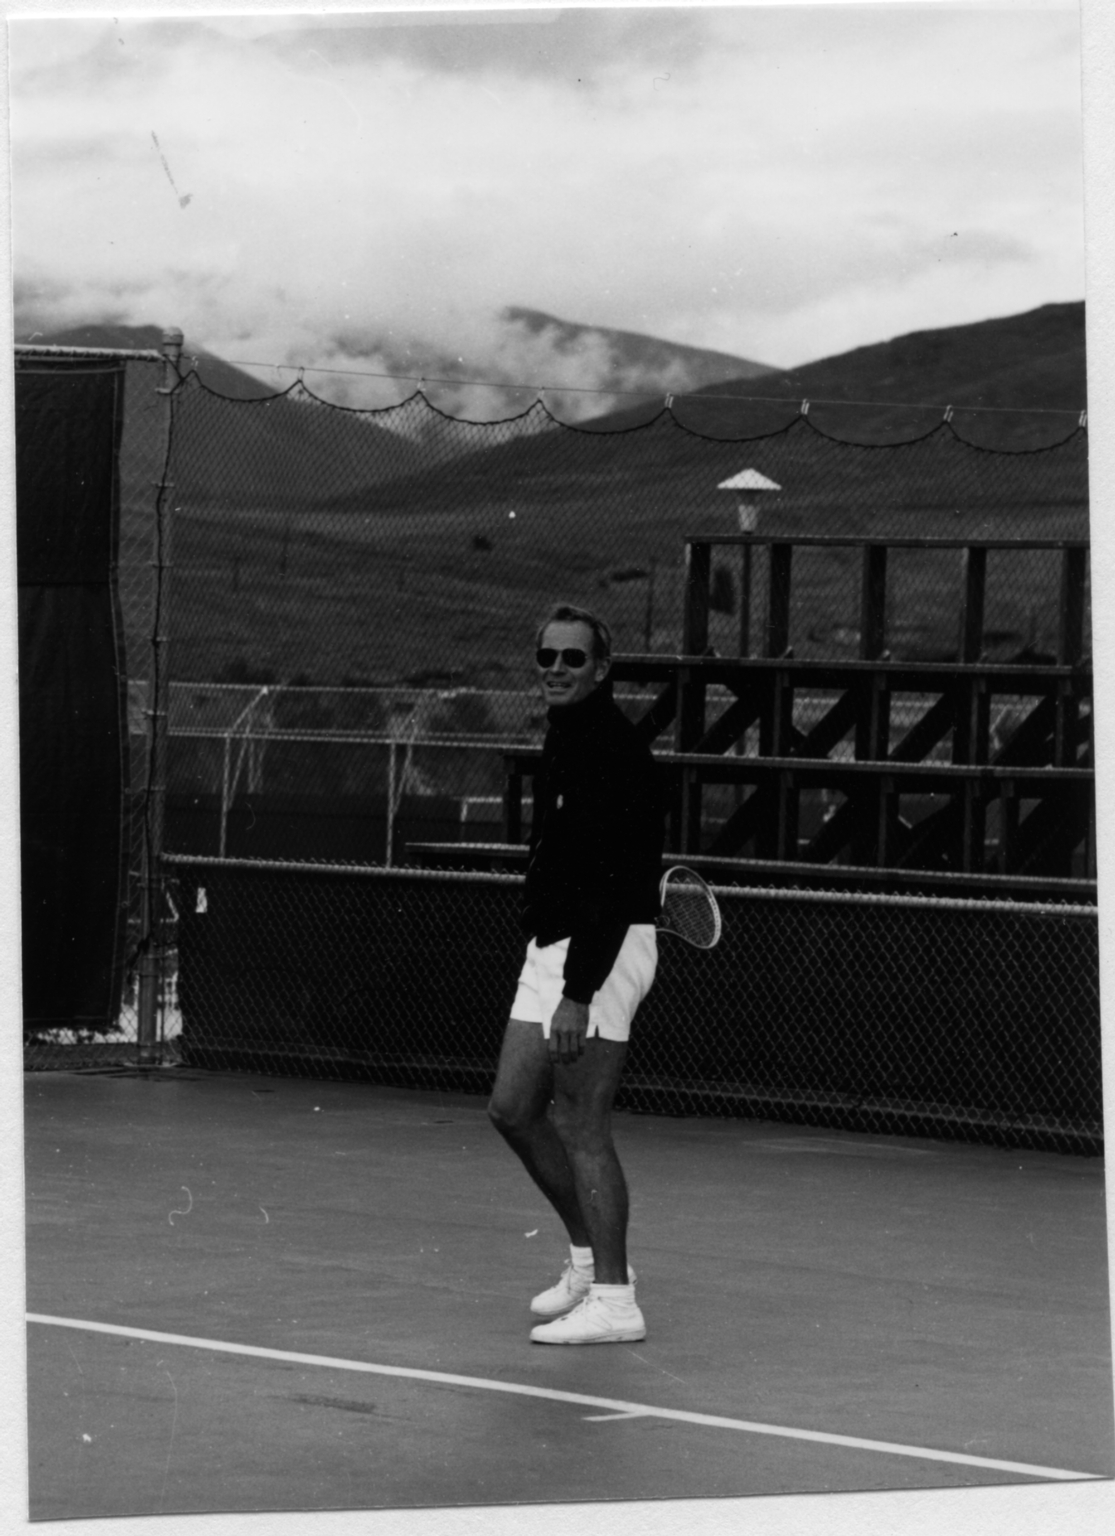 Charlton Heston on the tennis court